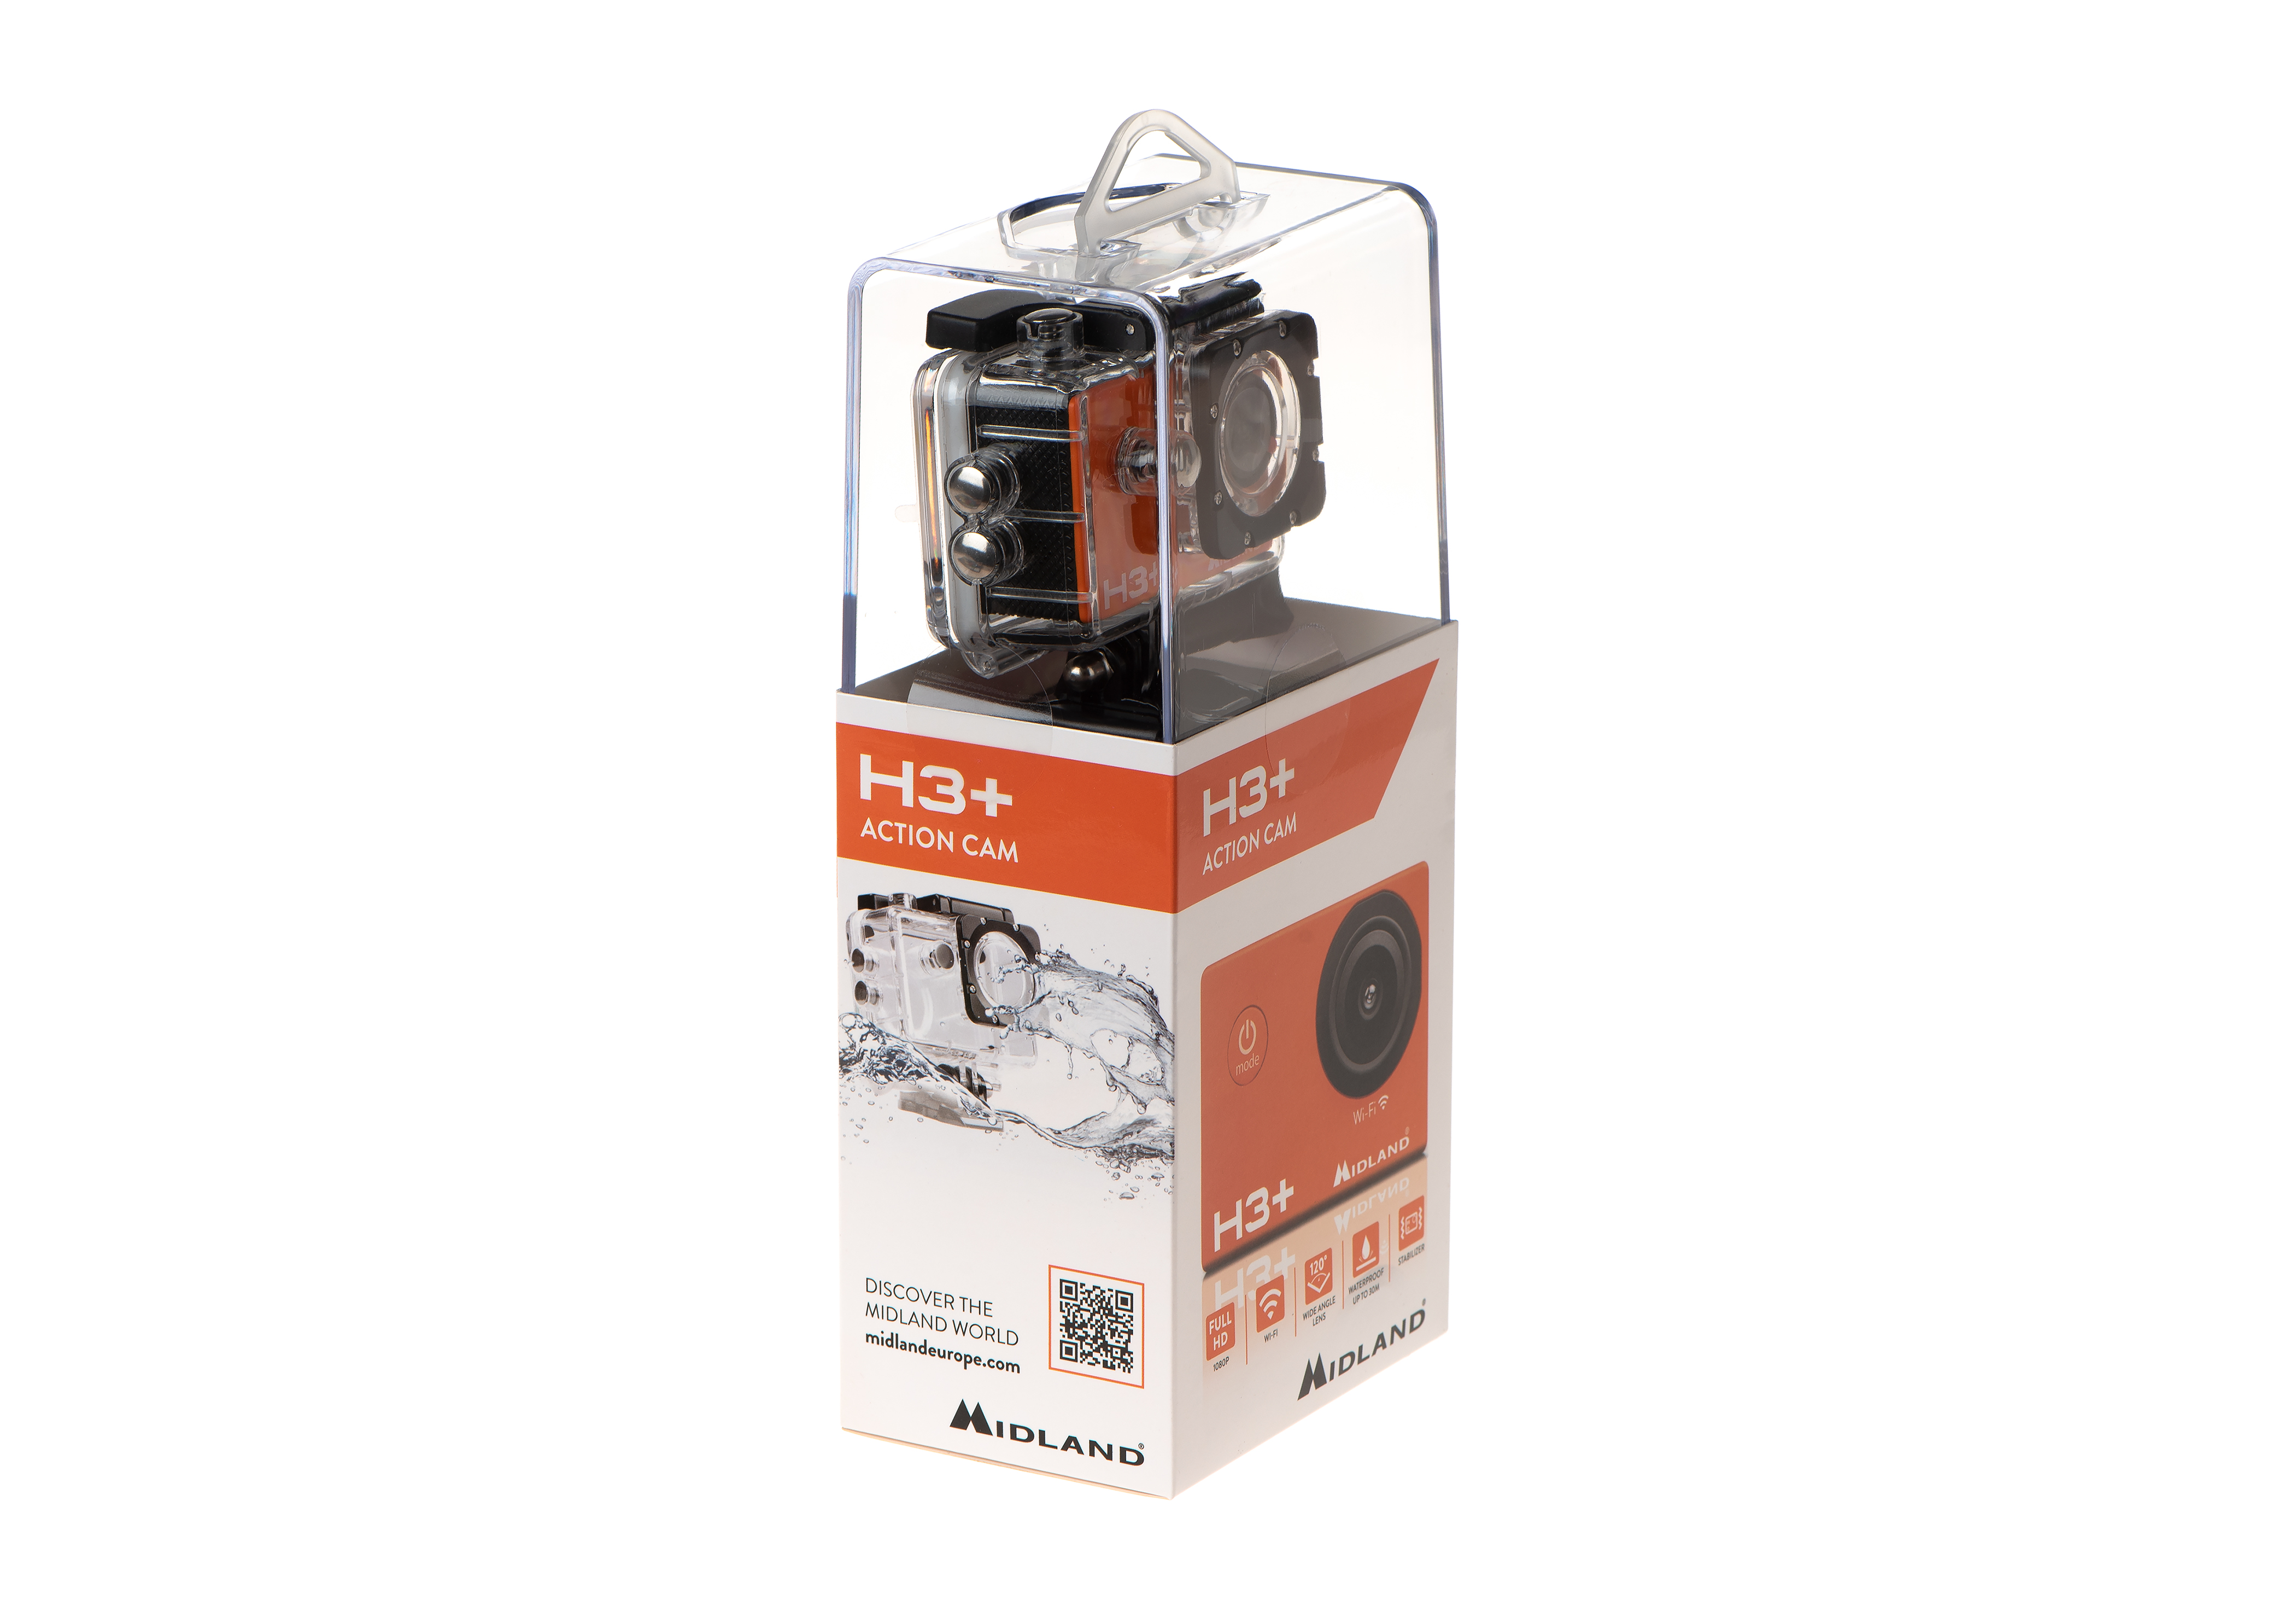 Midland H9 Pro Action Cam : buy online - Midland